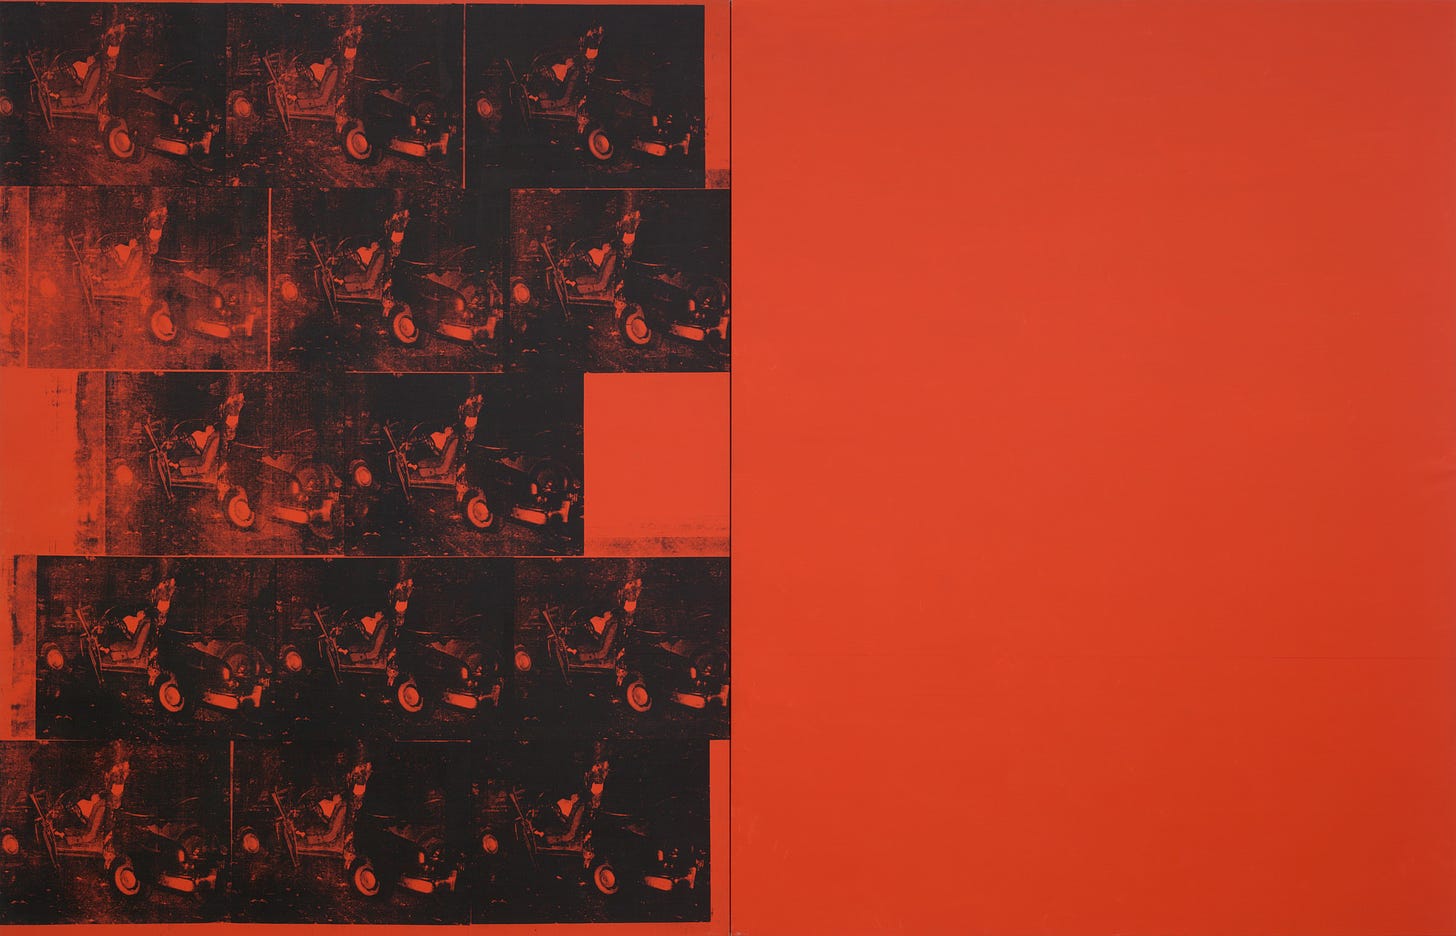 Andy Warhol. Orange Car Crash Fourteen Times. 1963 | MoMA